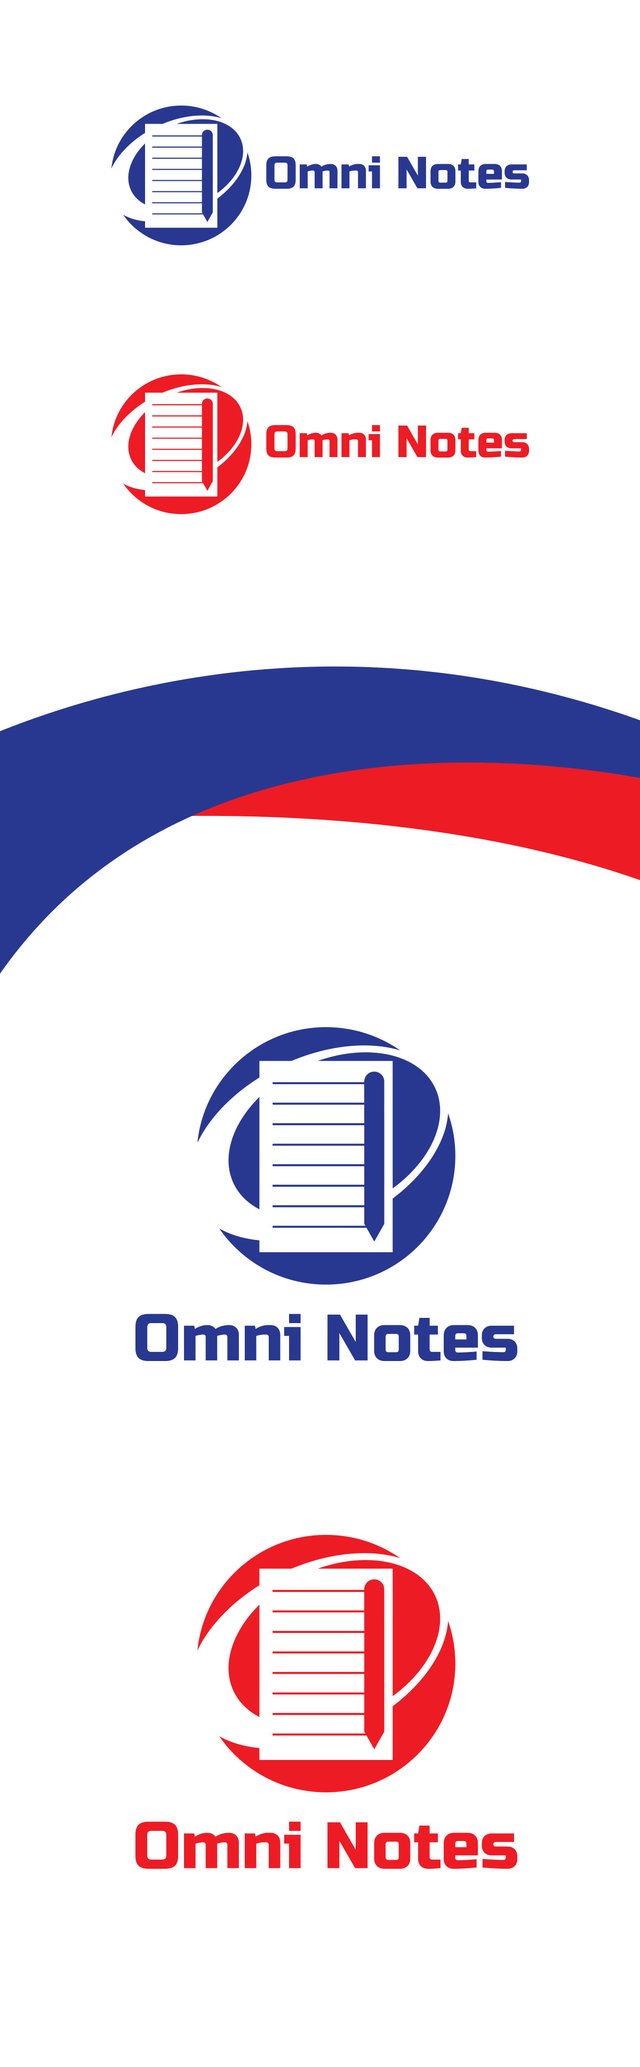 Omni-notes-4.jpg